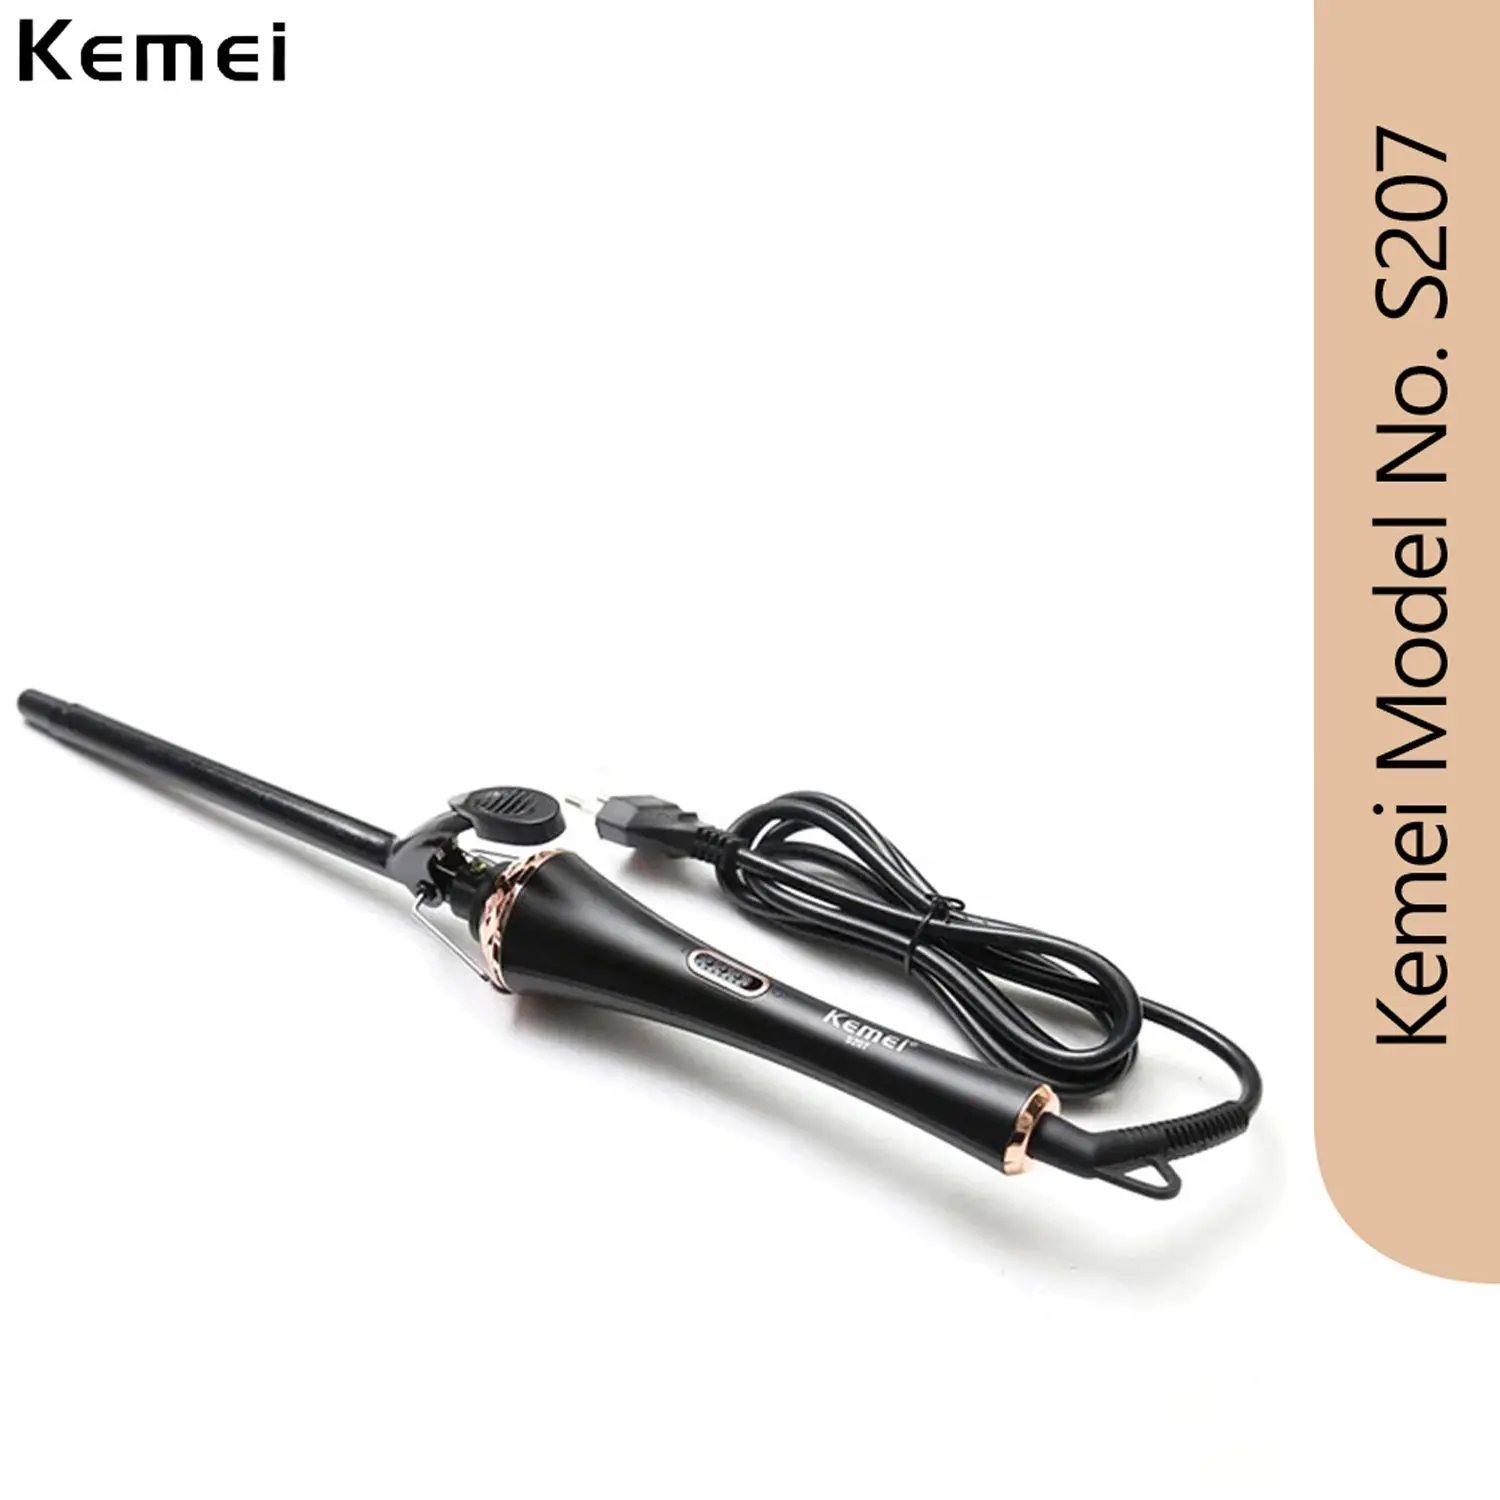 Kemei S207M Excellent Multi-Function Hair Curler